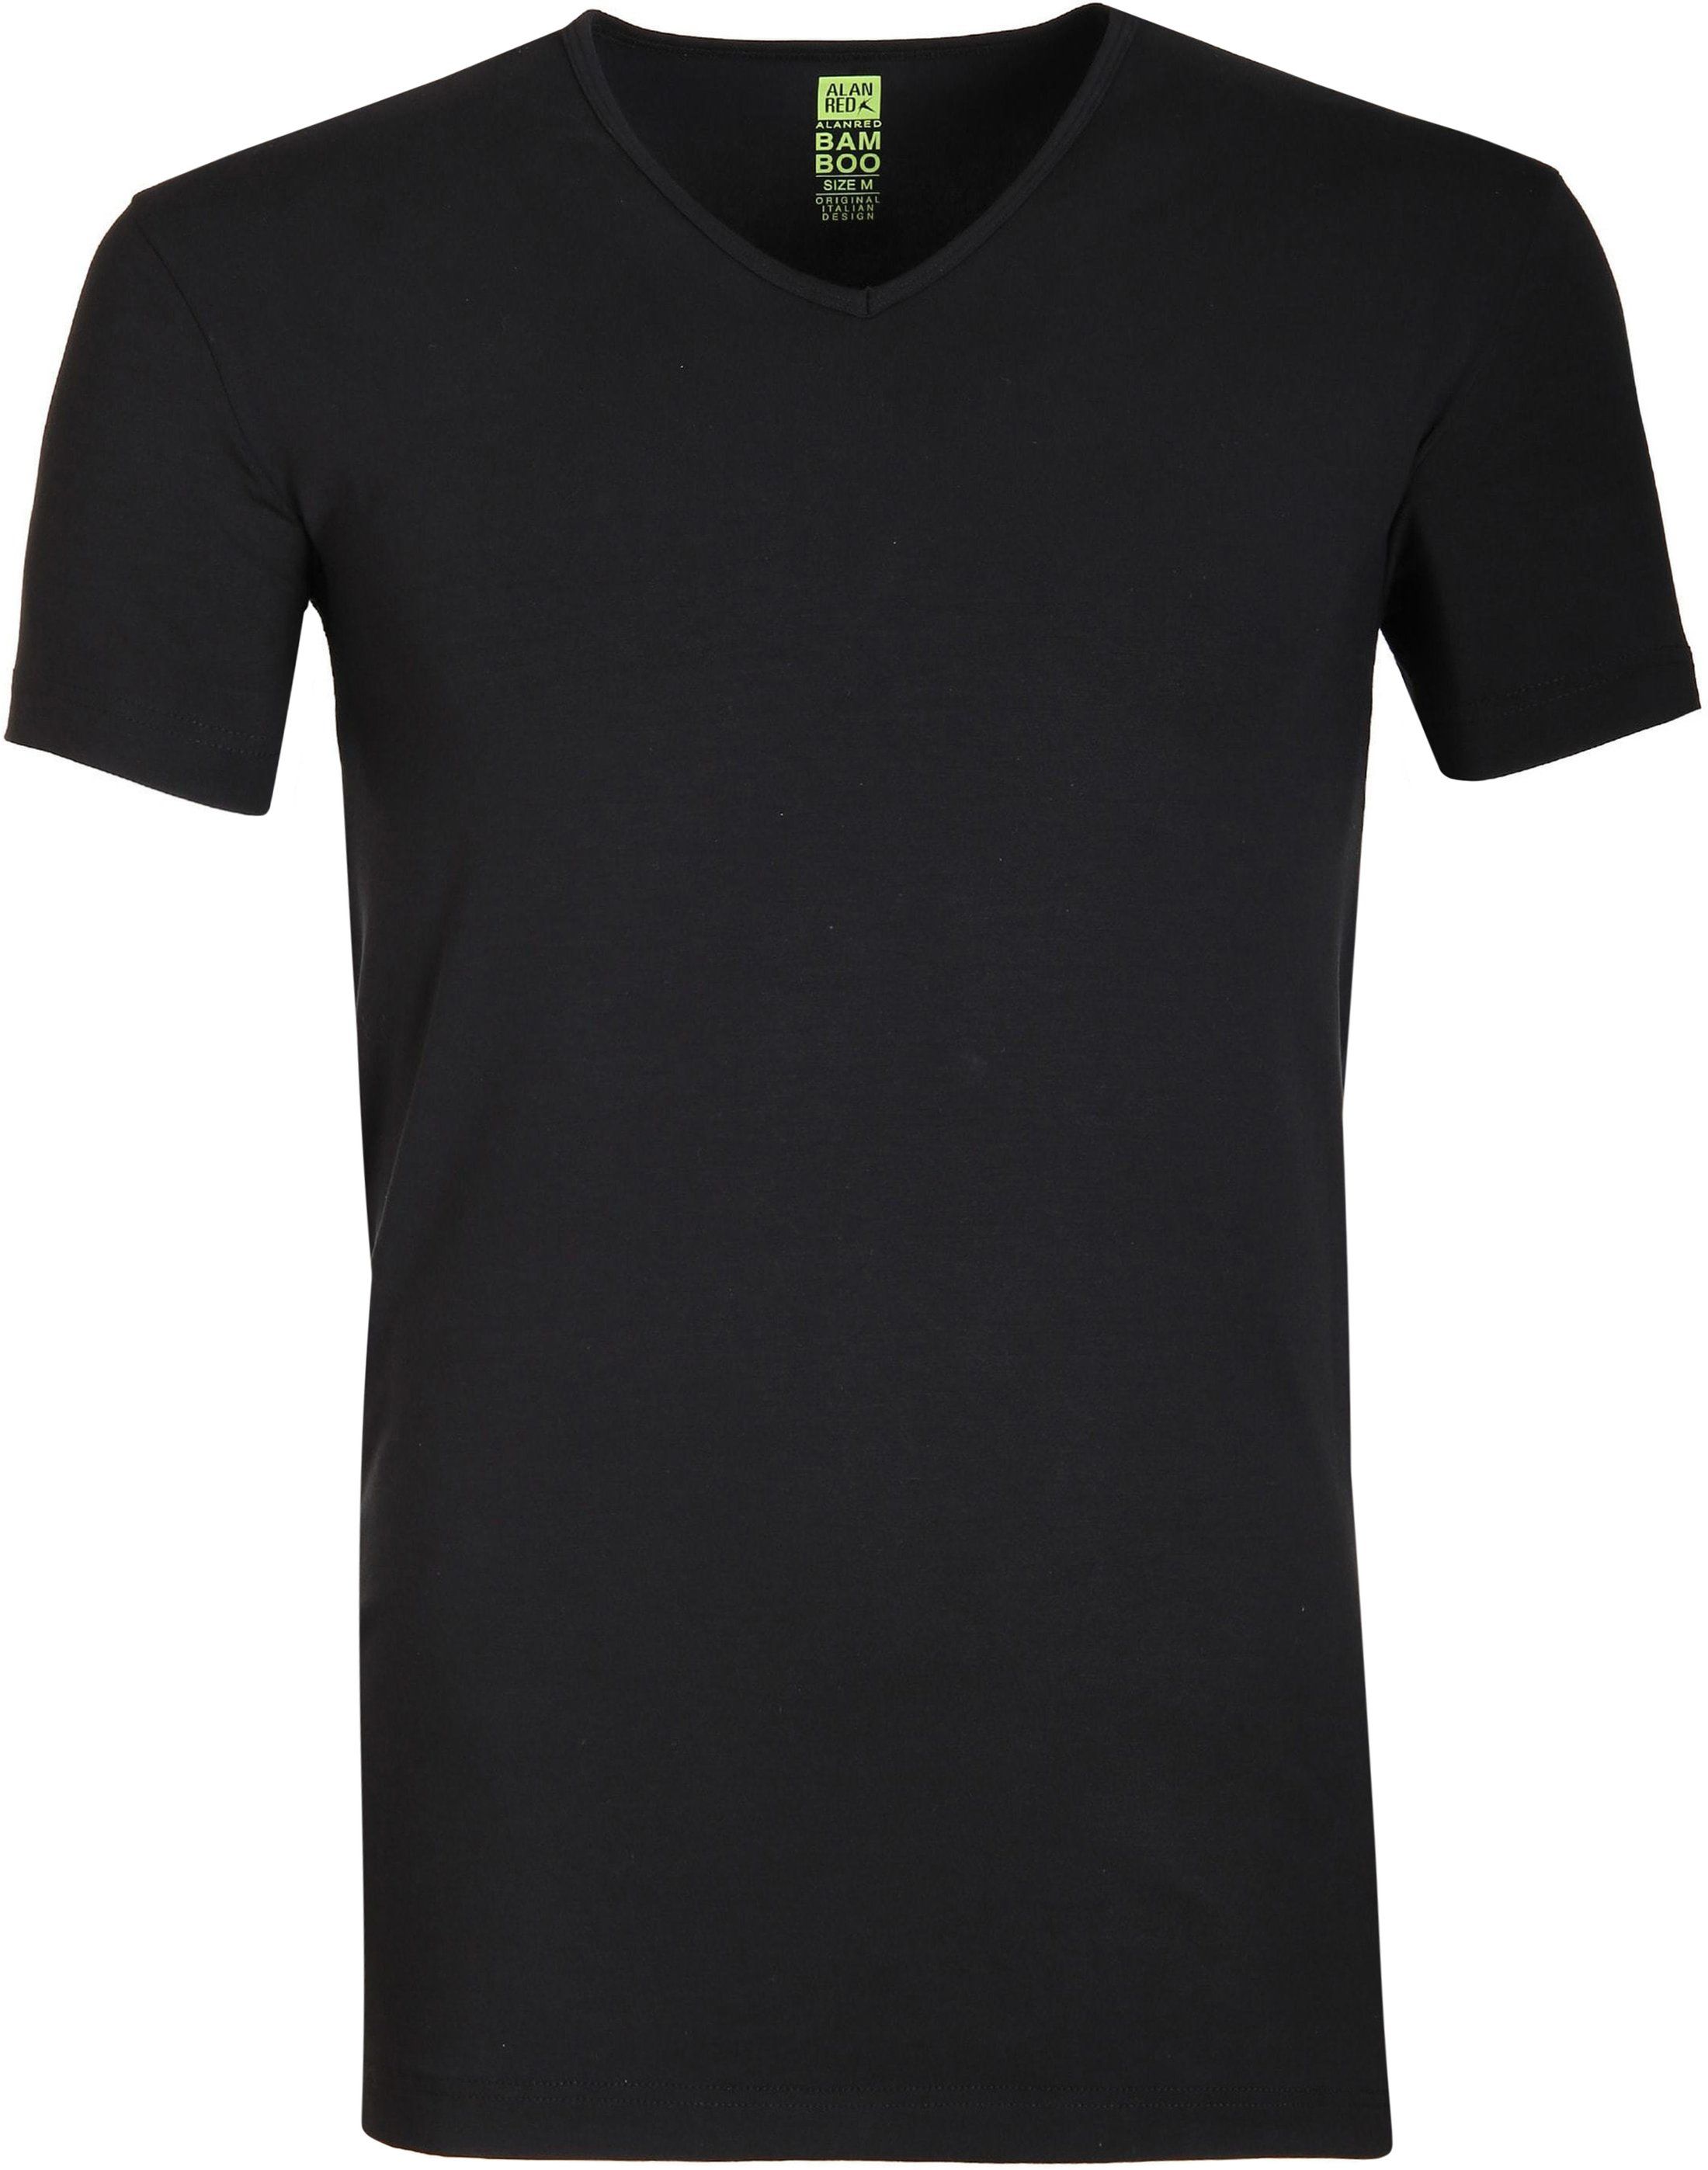 Alan Red Bamboo T-shirt Black size M